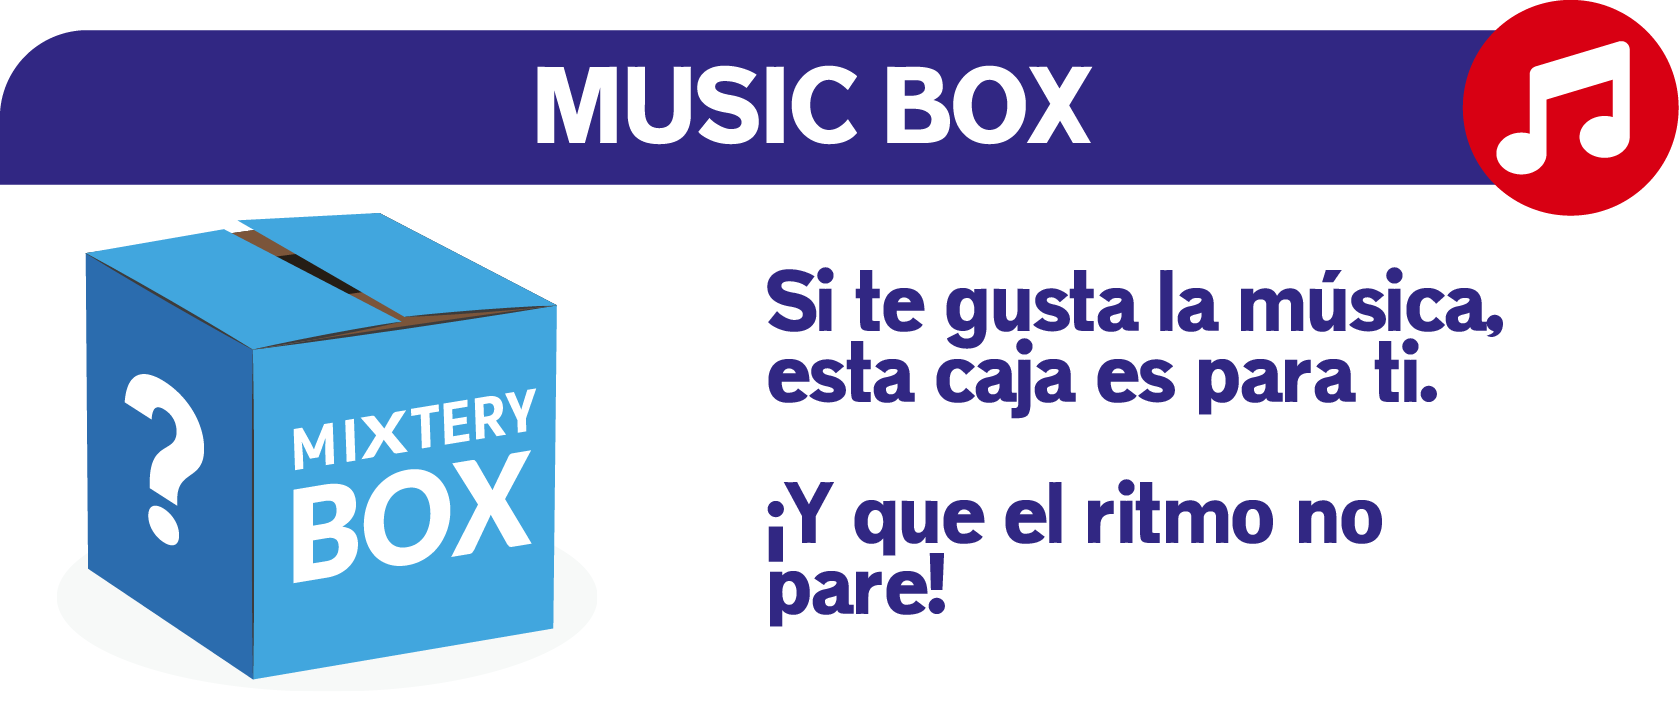 Mixtery Box 4